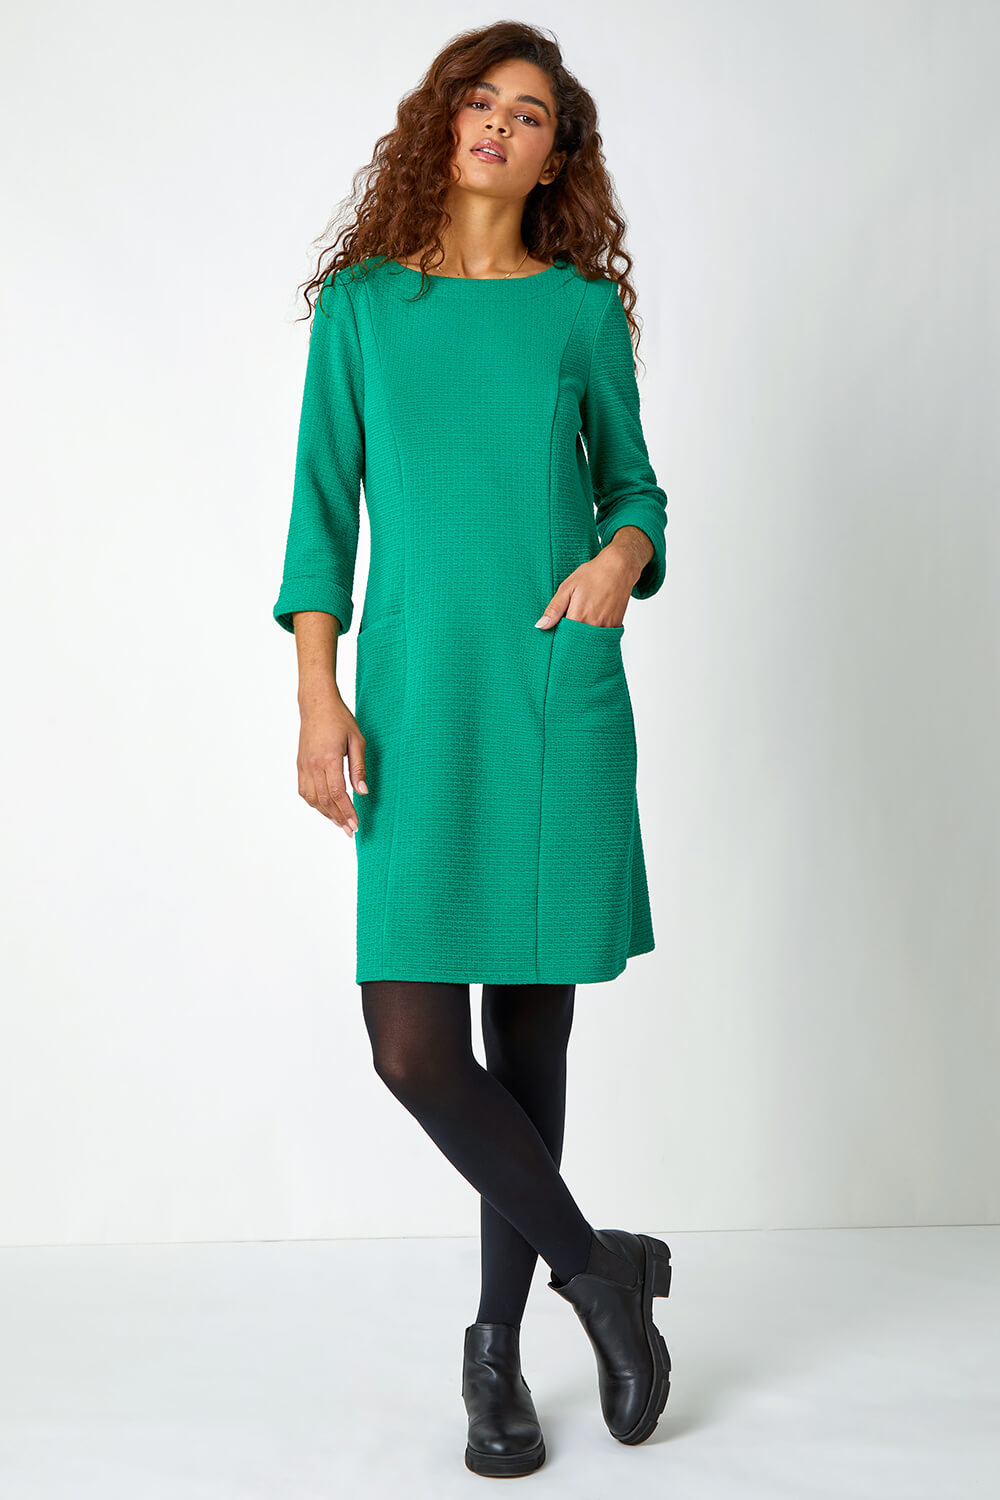 Green Textured Pocket Cotton Blend Shift Dress, Image 2 of 5